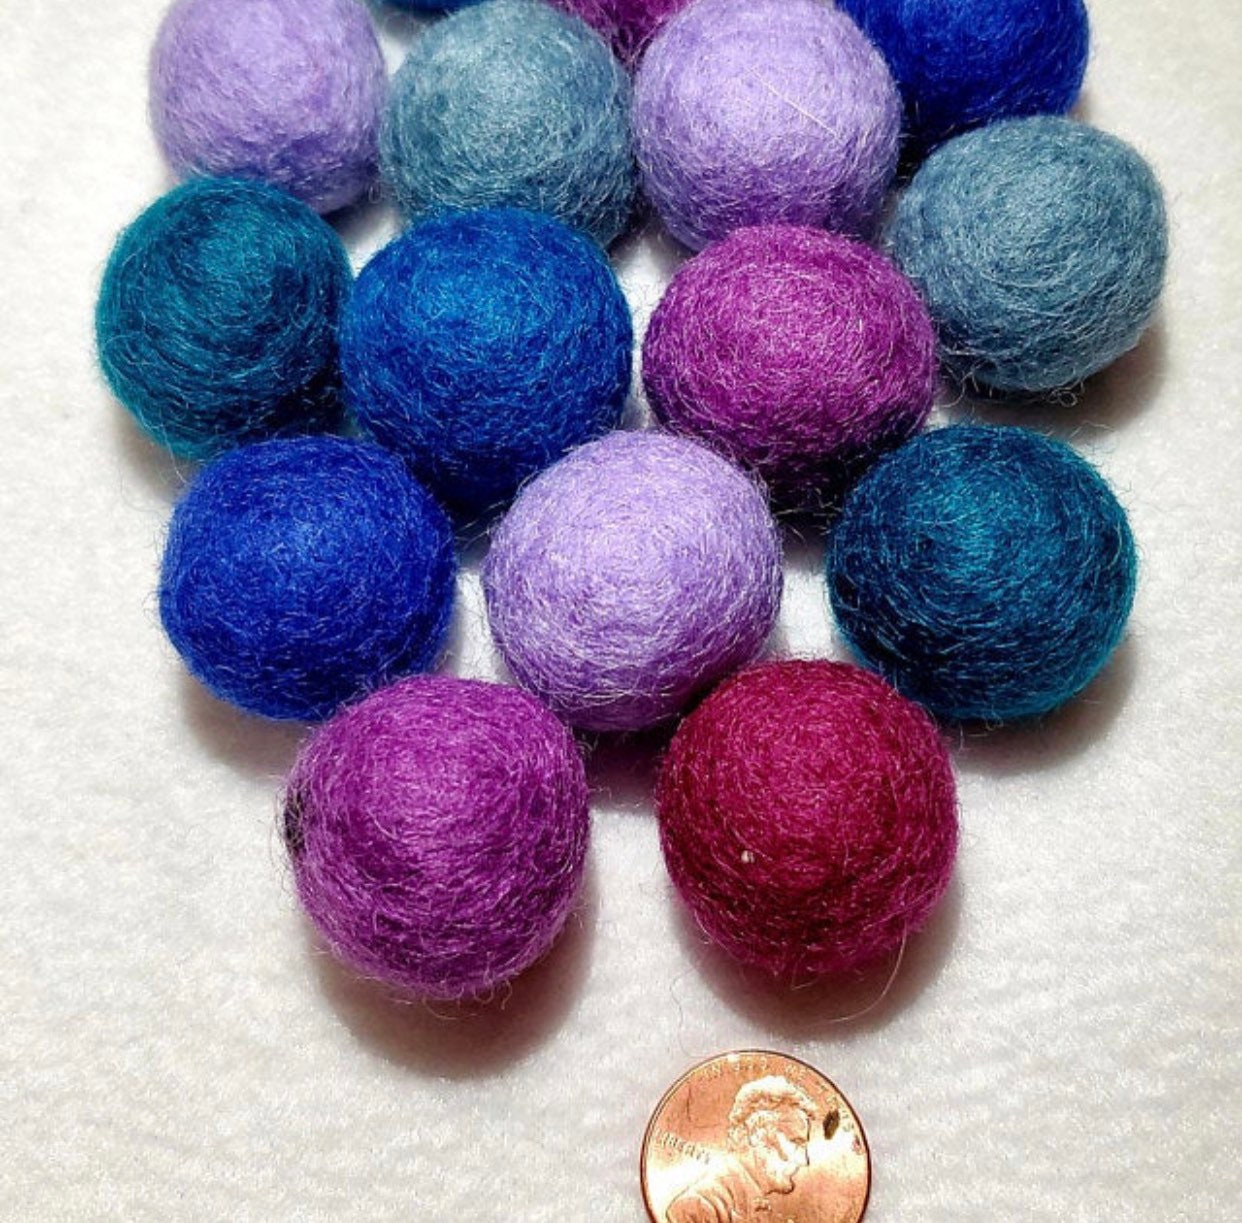 Red Felt Balls 2.5 Cm Felted Wool Balls for Holiday Crafting Wholesale Bulk  Felt Balls DIY Nursery or Holiday Garland Wool Poms Only 